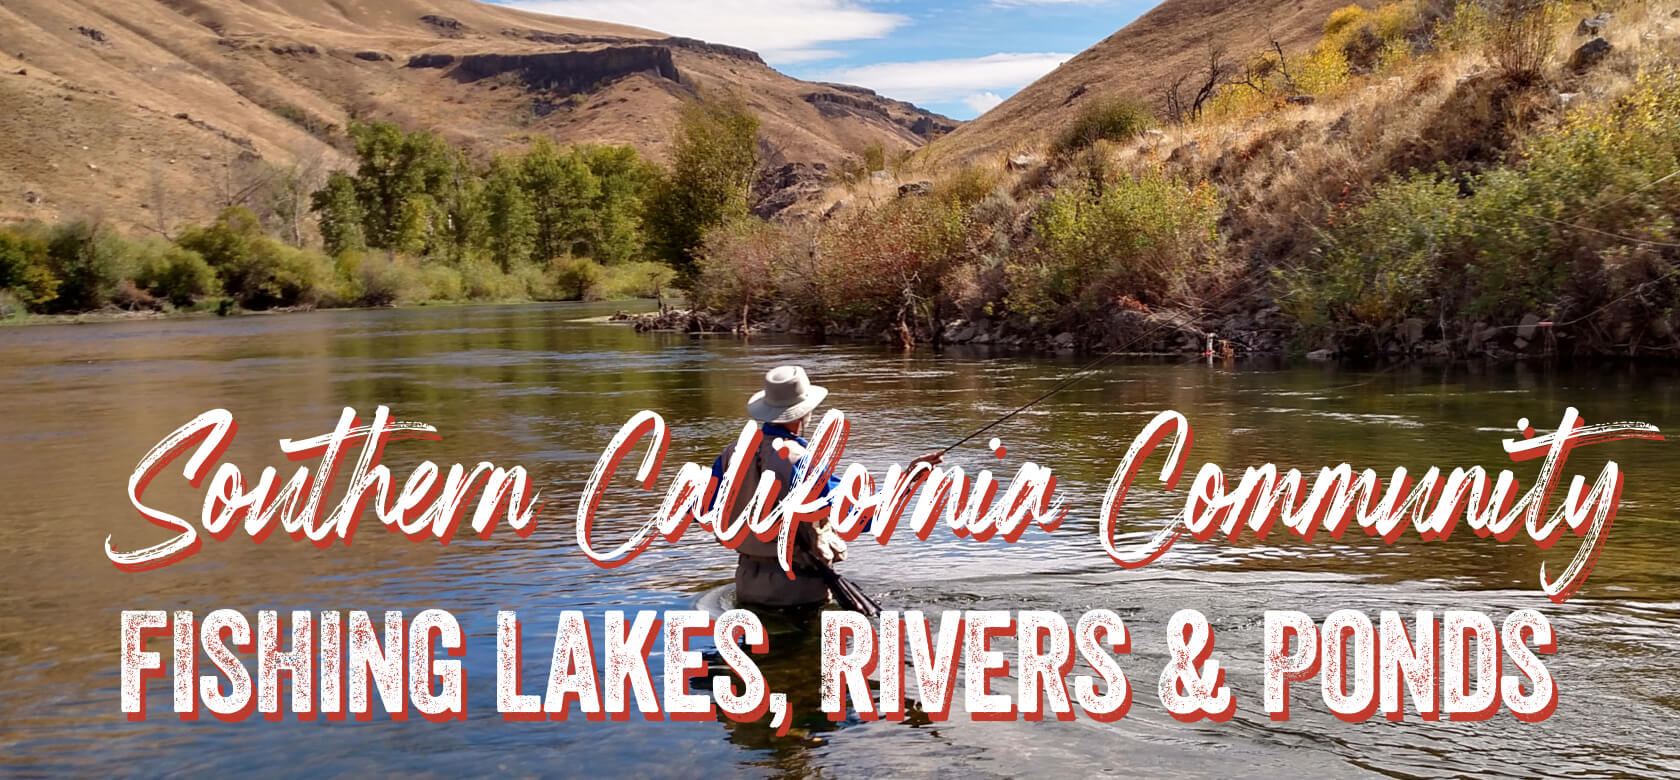 Southern-California-Community-Fishing-Lakes-Rivers-Ponds